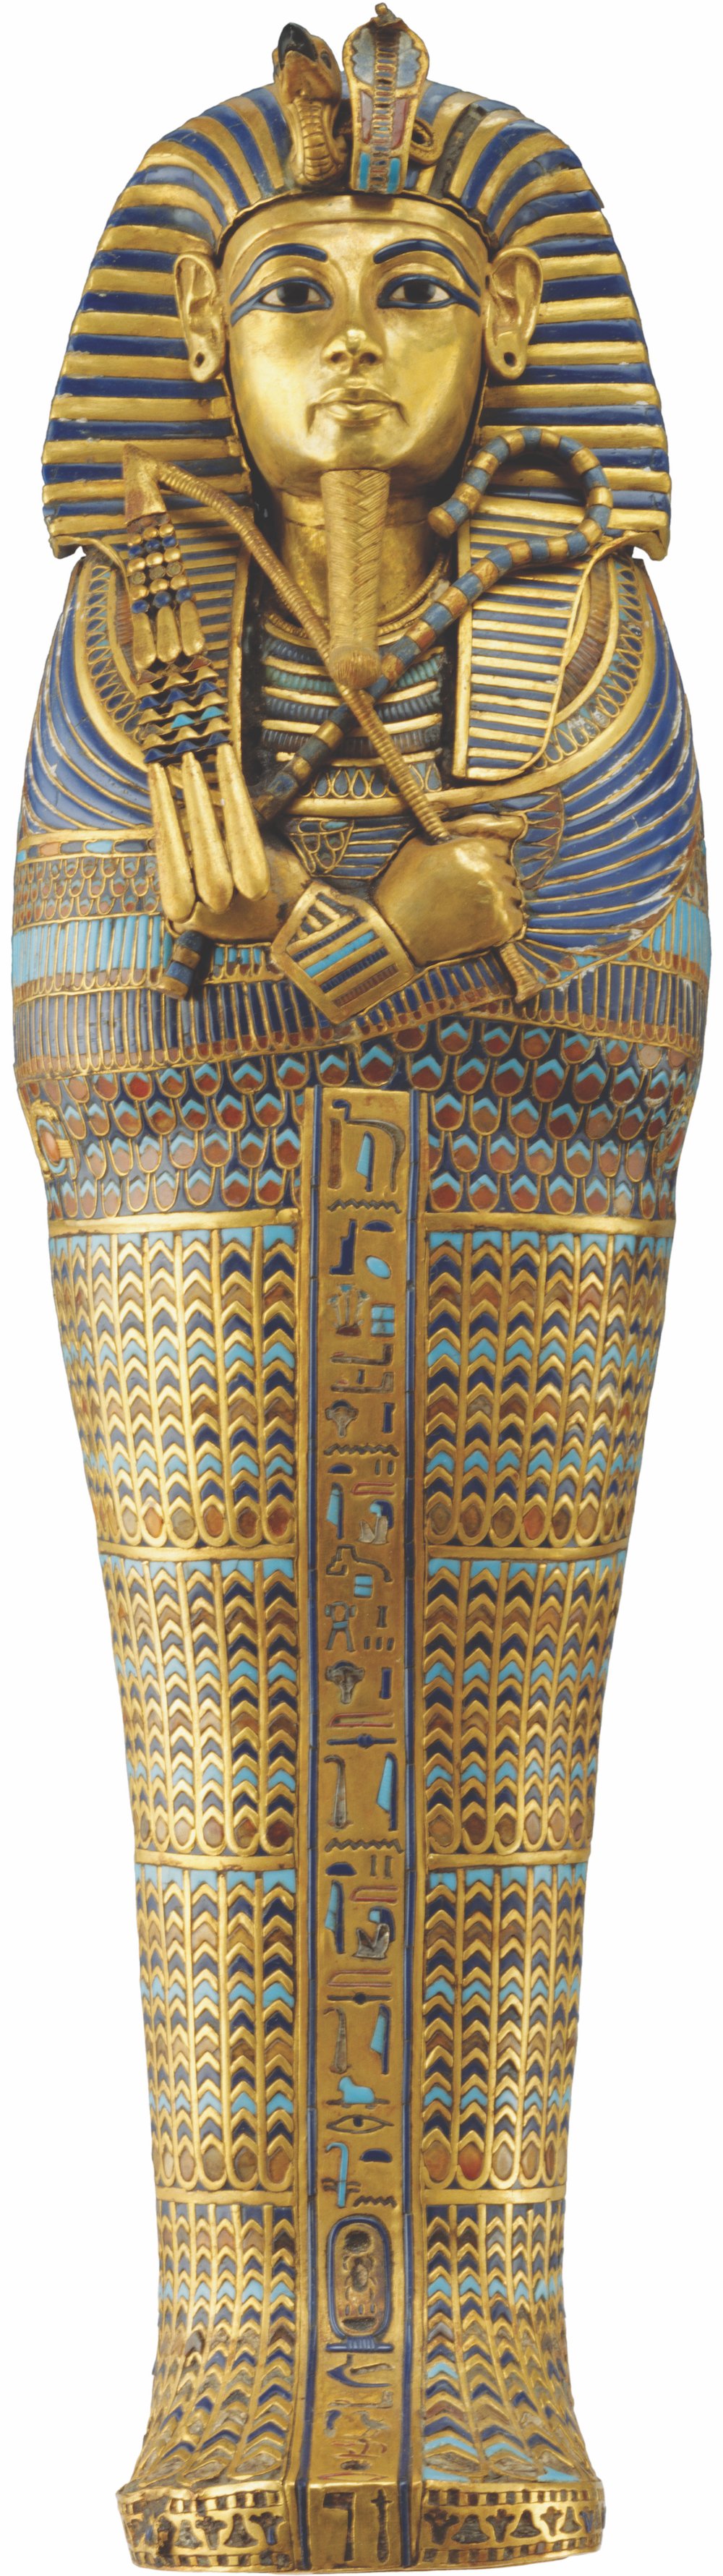 Gold Gold Inlaid Canopic Coffinette of Tutankhamun Dedicated to Imseti and Isis (Reign of Tutankhamun 1336-1326 B.C.E) ©Laboratoriorosso, Viterbo, ItalyInlaid Canopic Coffinette of Tutankhamun Dedicated to Imseti and Isis Image courtesy of Laboratoriorosso, Viterbo, Italy